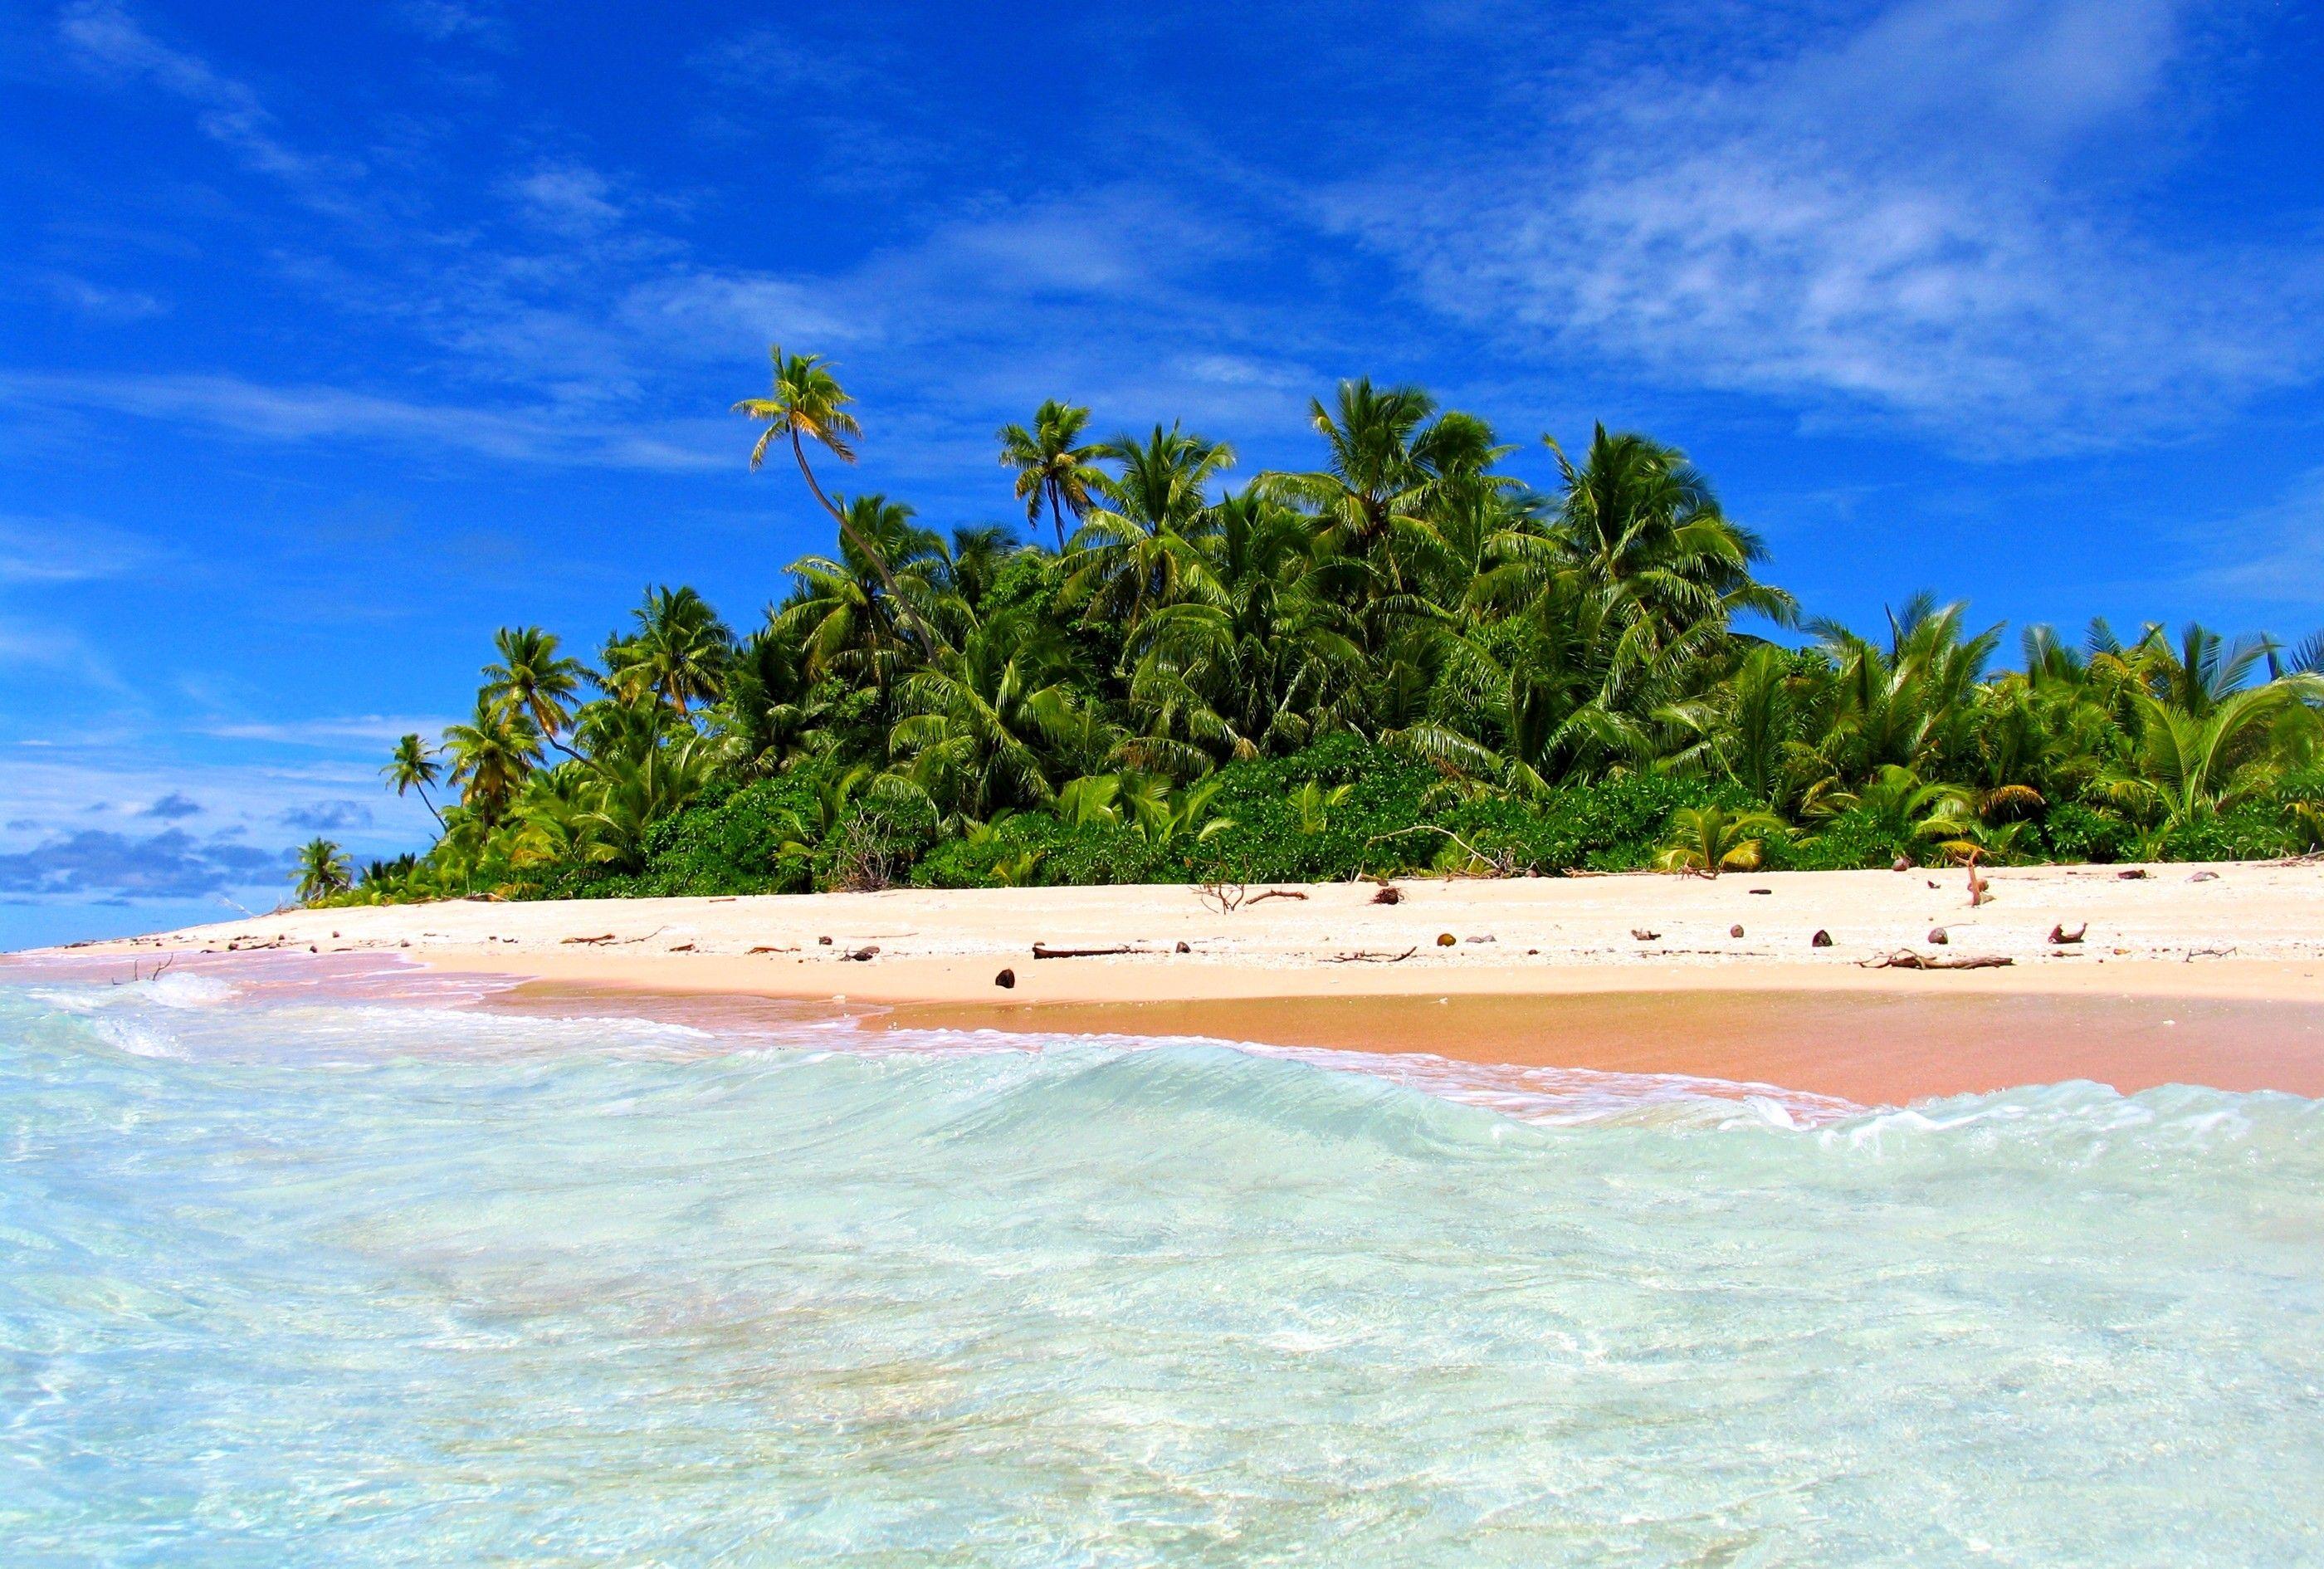 Beach: Funafuti Atoll Tuvalu Island Paradisiac Sand Sea Palms